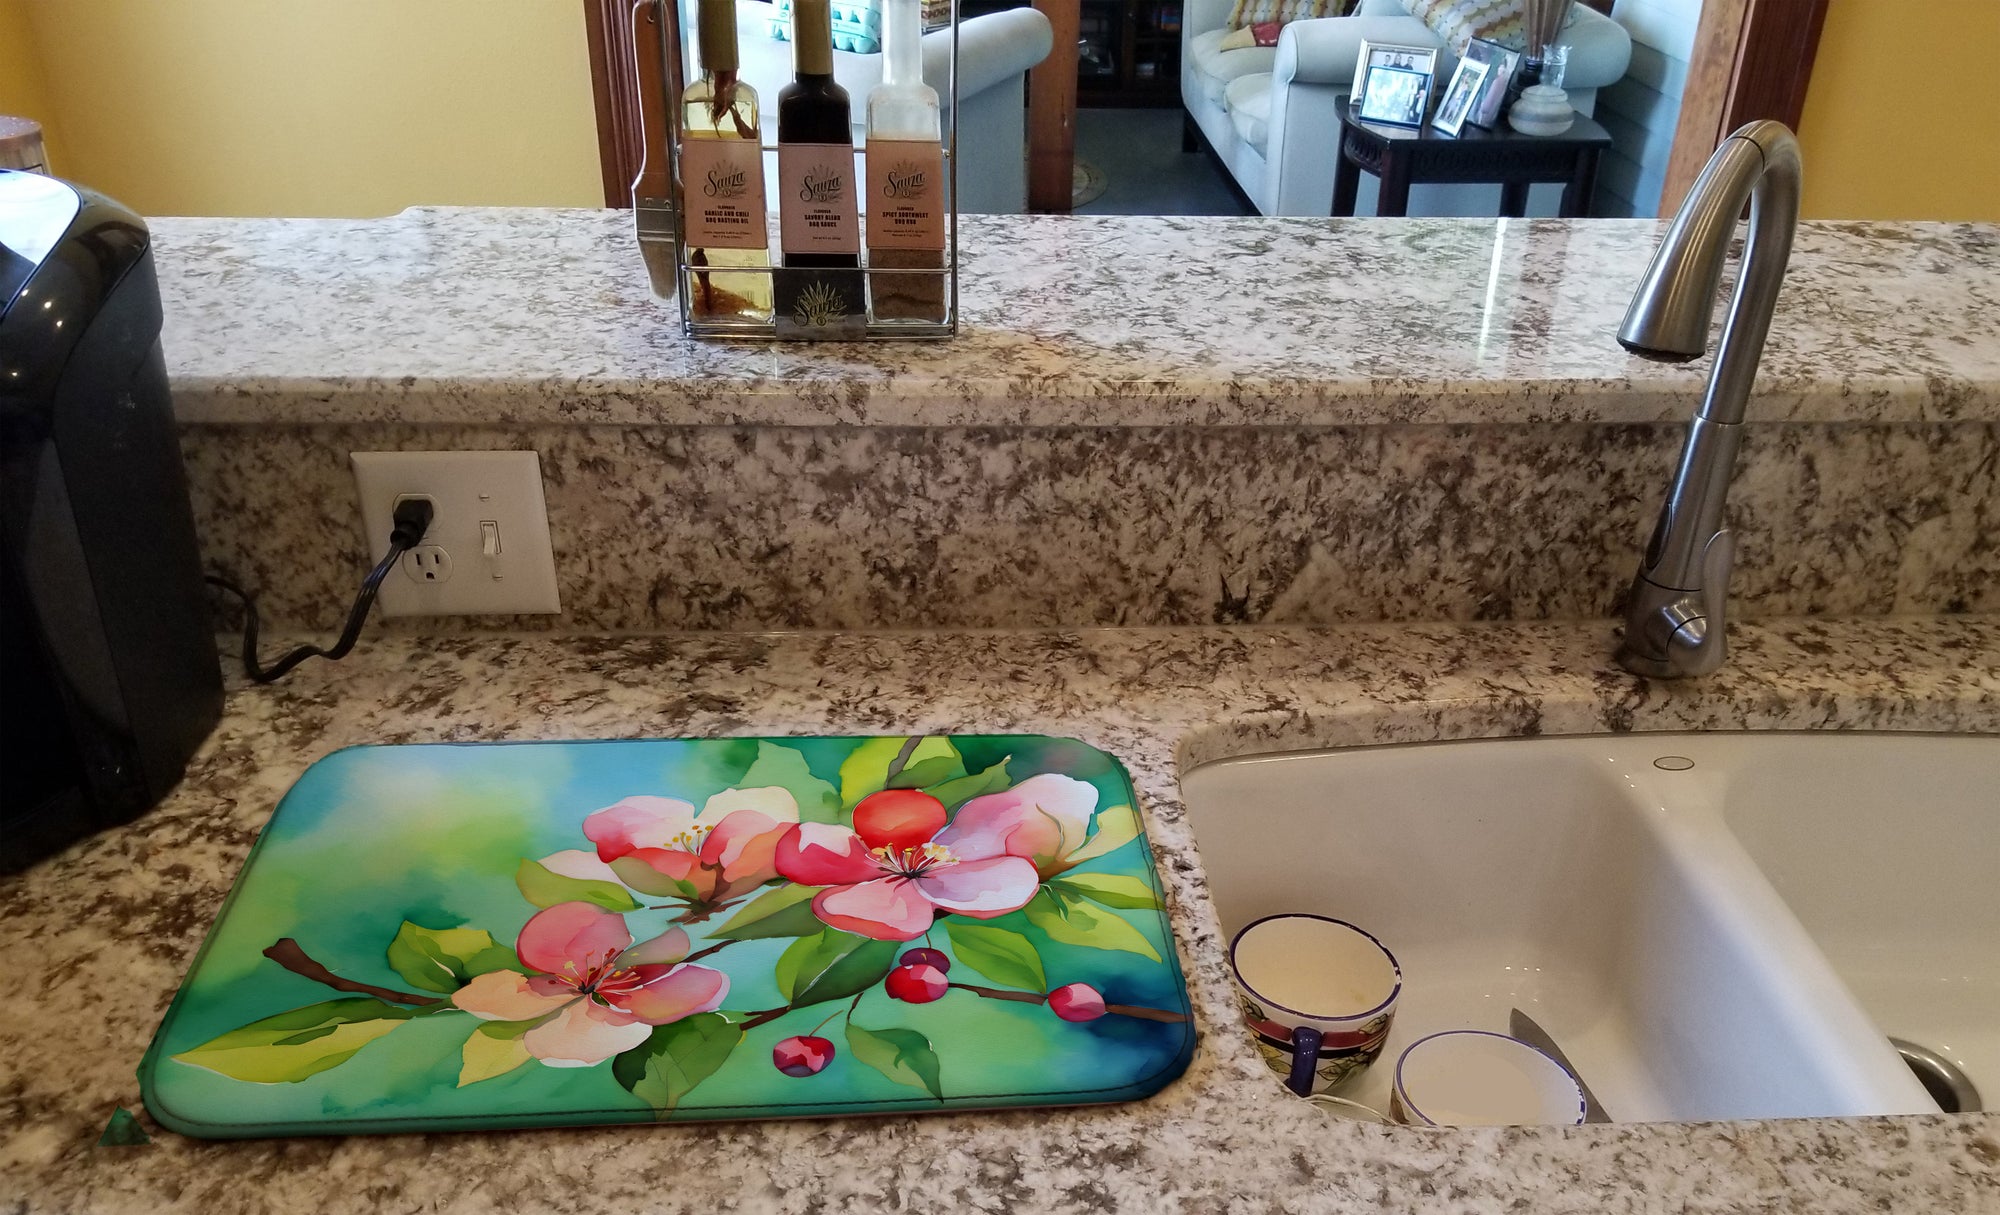 Buy this Arkansas Apple Blossom in Watercolor Dish Drying Mat